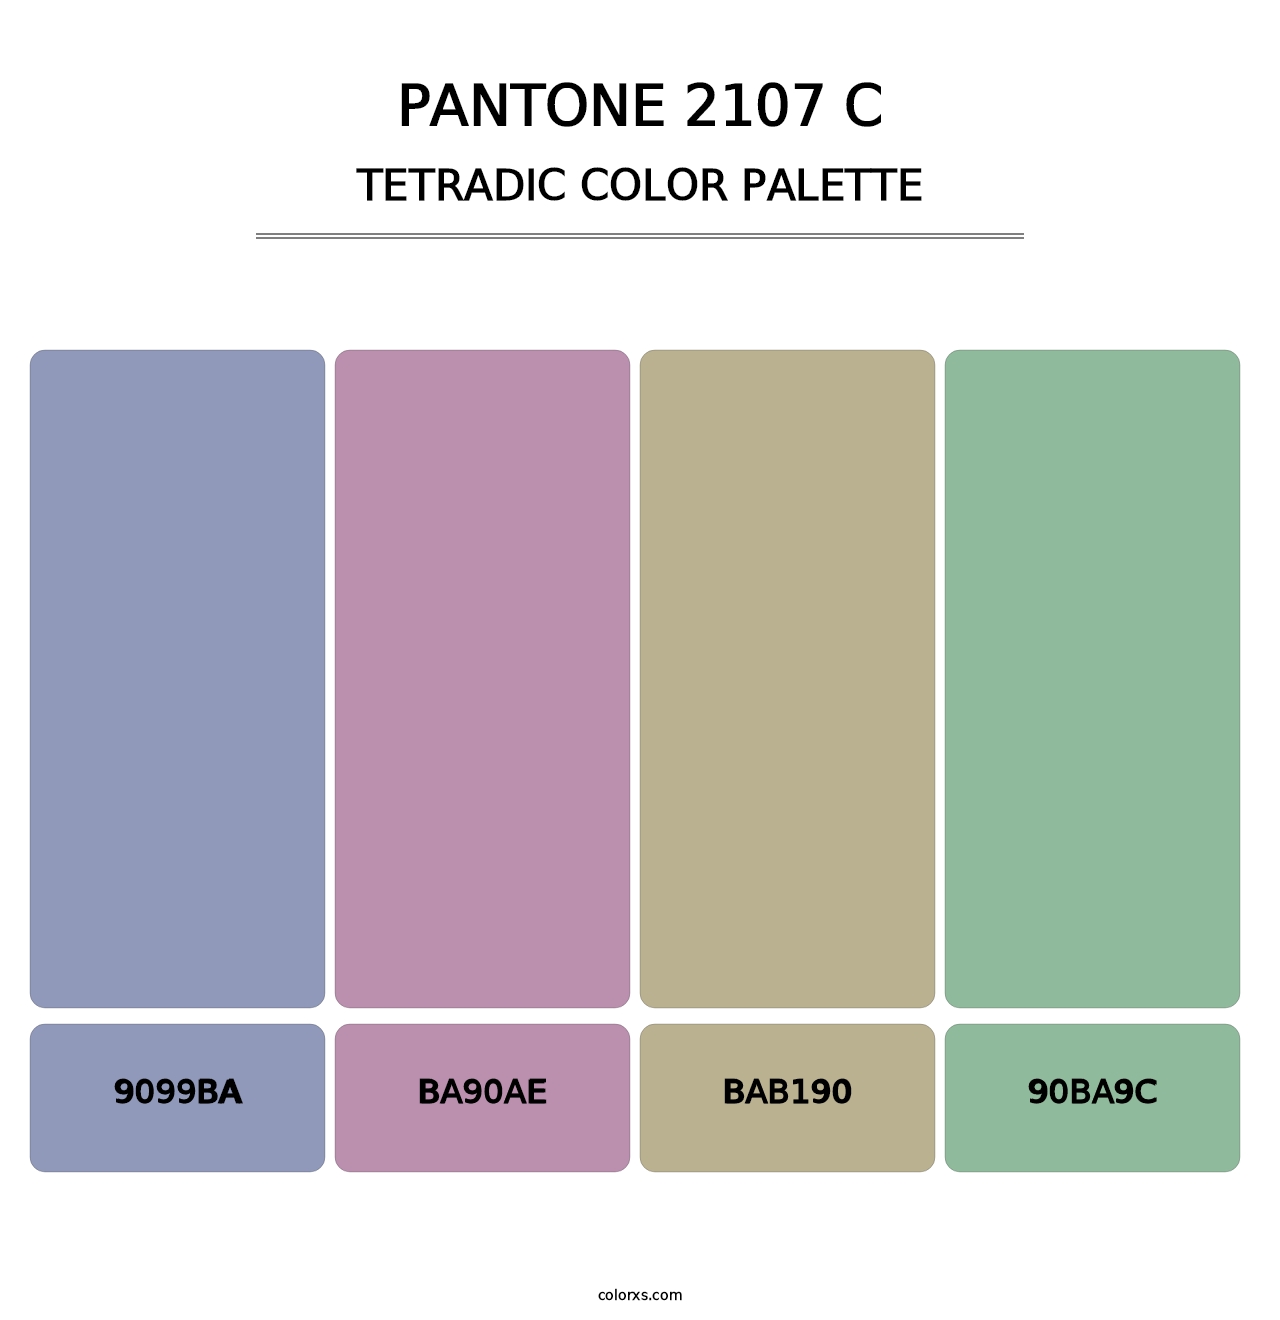 PANTONE 2107 C - Tetradic Color Palette